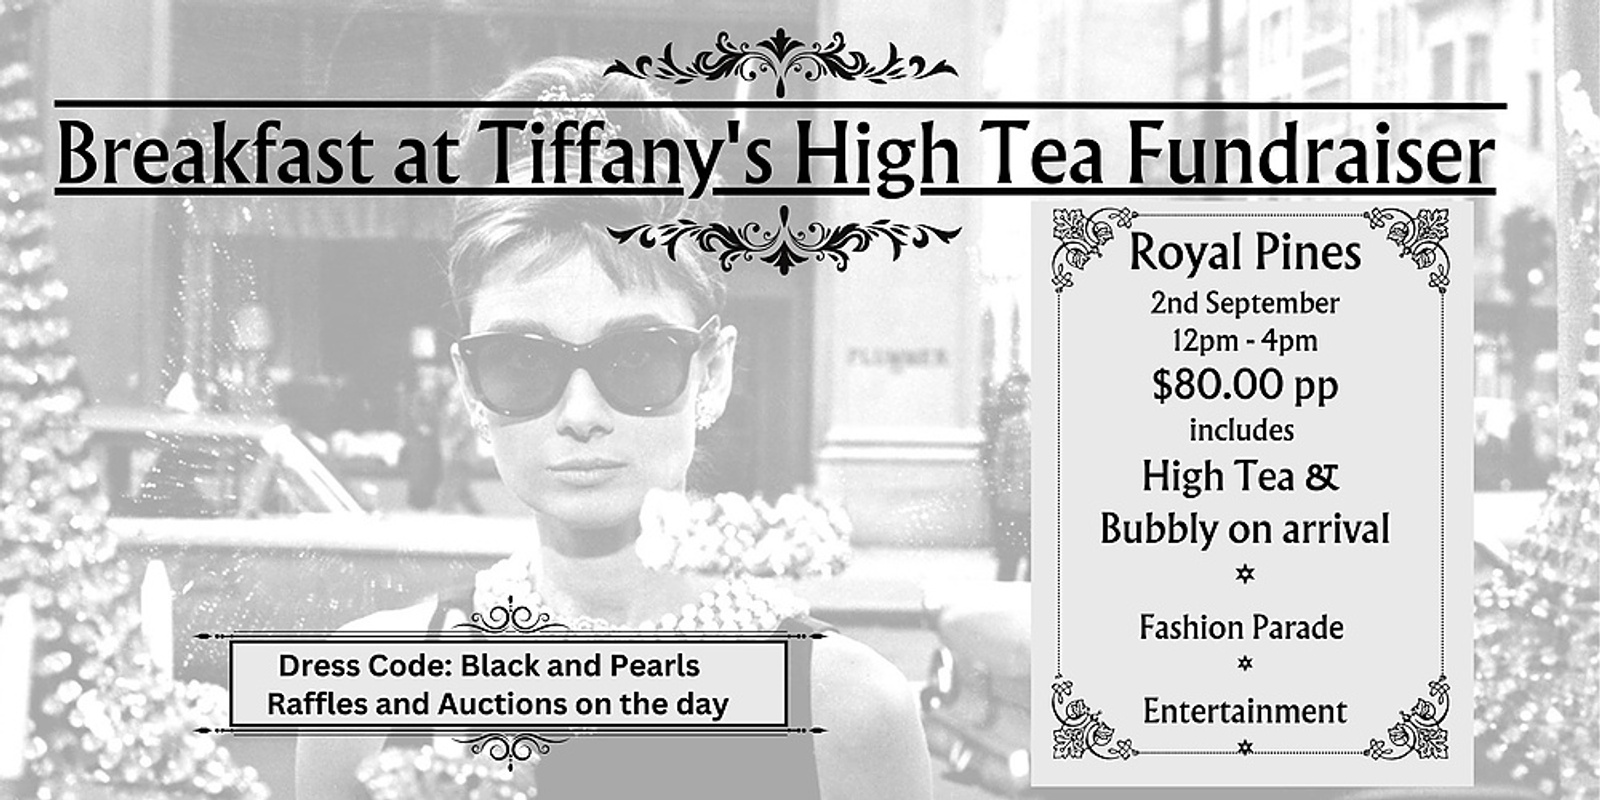 Breakfast at Tiffany's High Tea Fundraiser